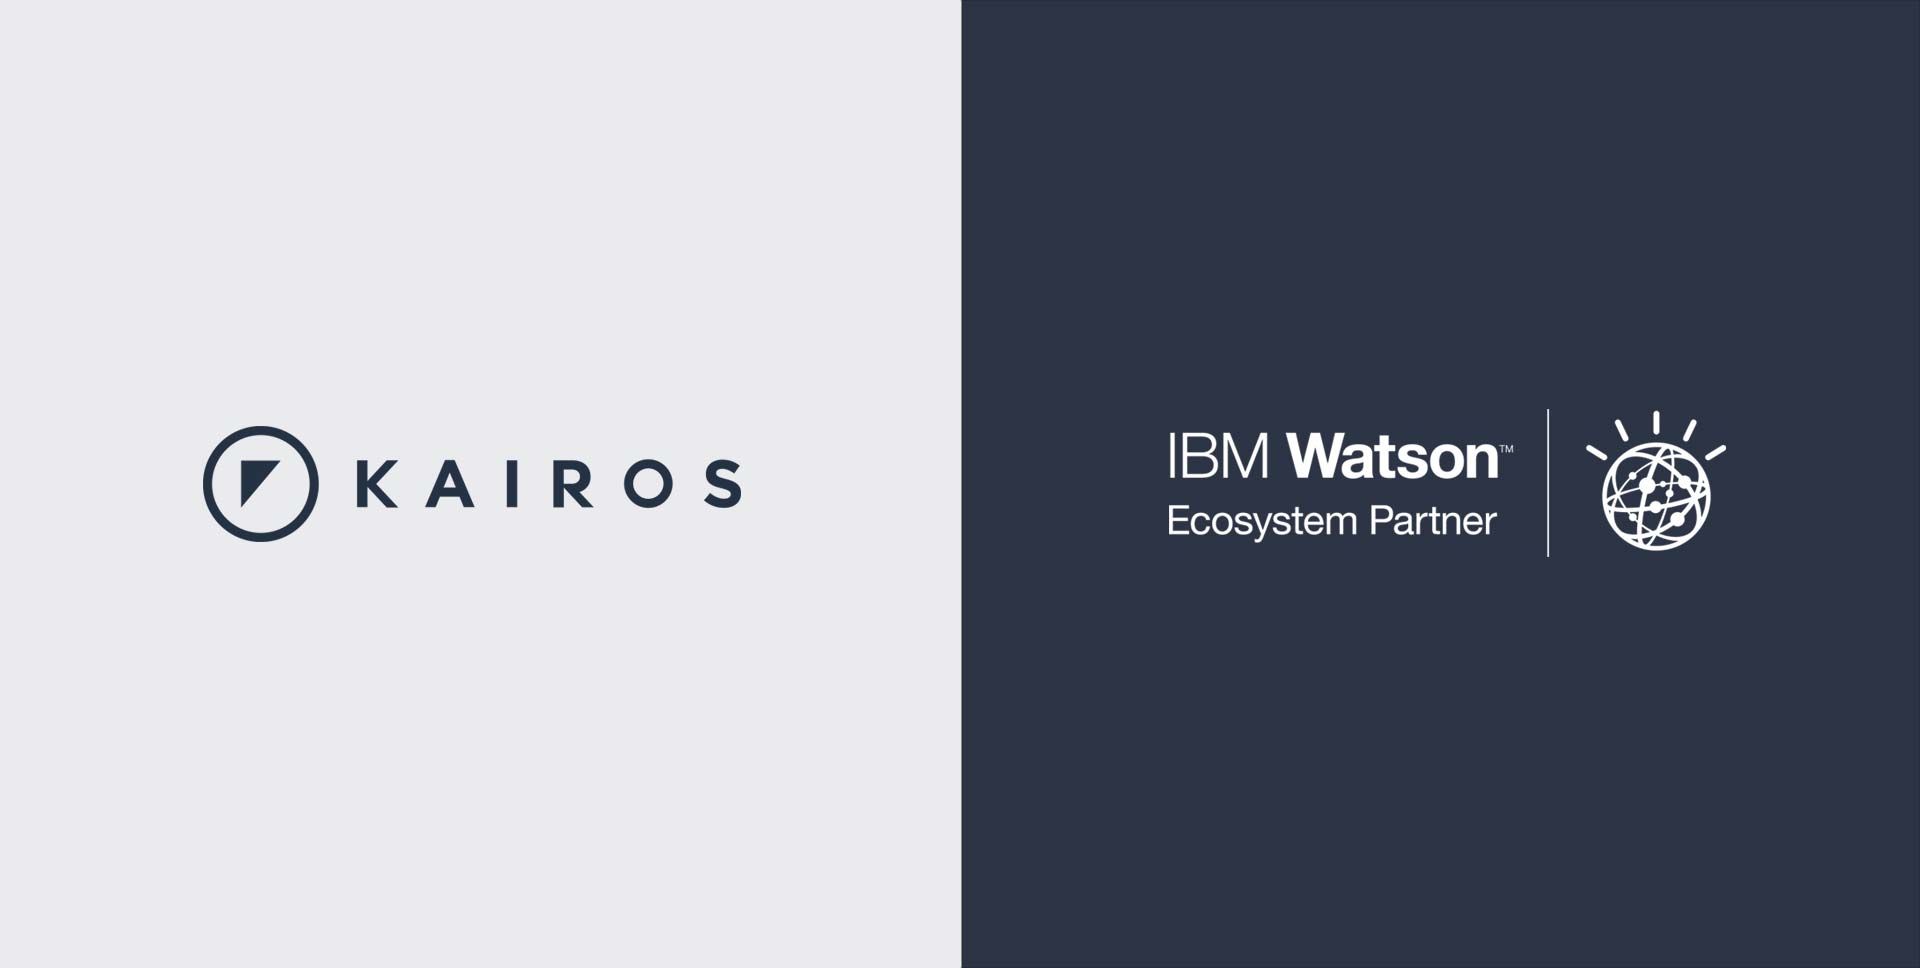 Image of the 'Kairos Human Analytics' logo and 'IBM Watson Ecosystem Partnership' logo